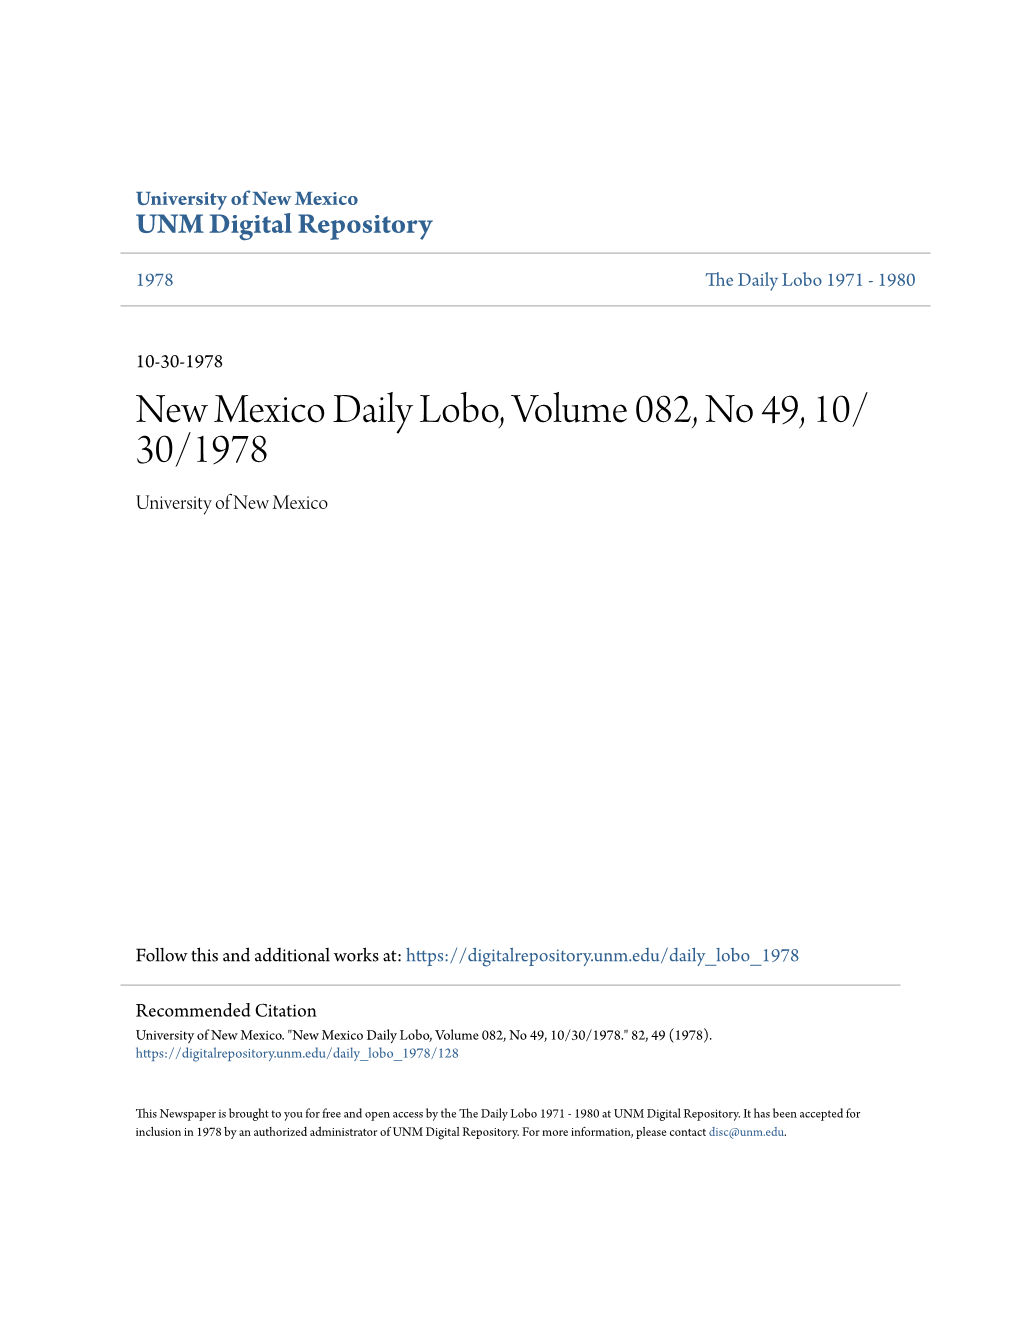 New Mexico Daily Lobo, Volume 082, No 49, 10/30/1978." 82, 49 (1978)